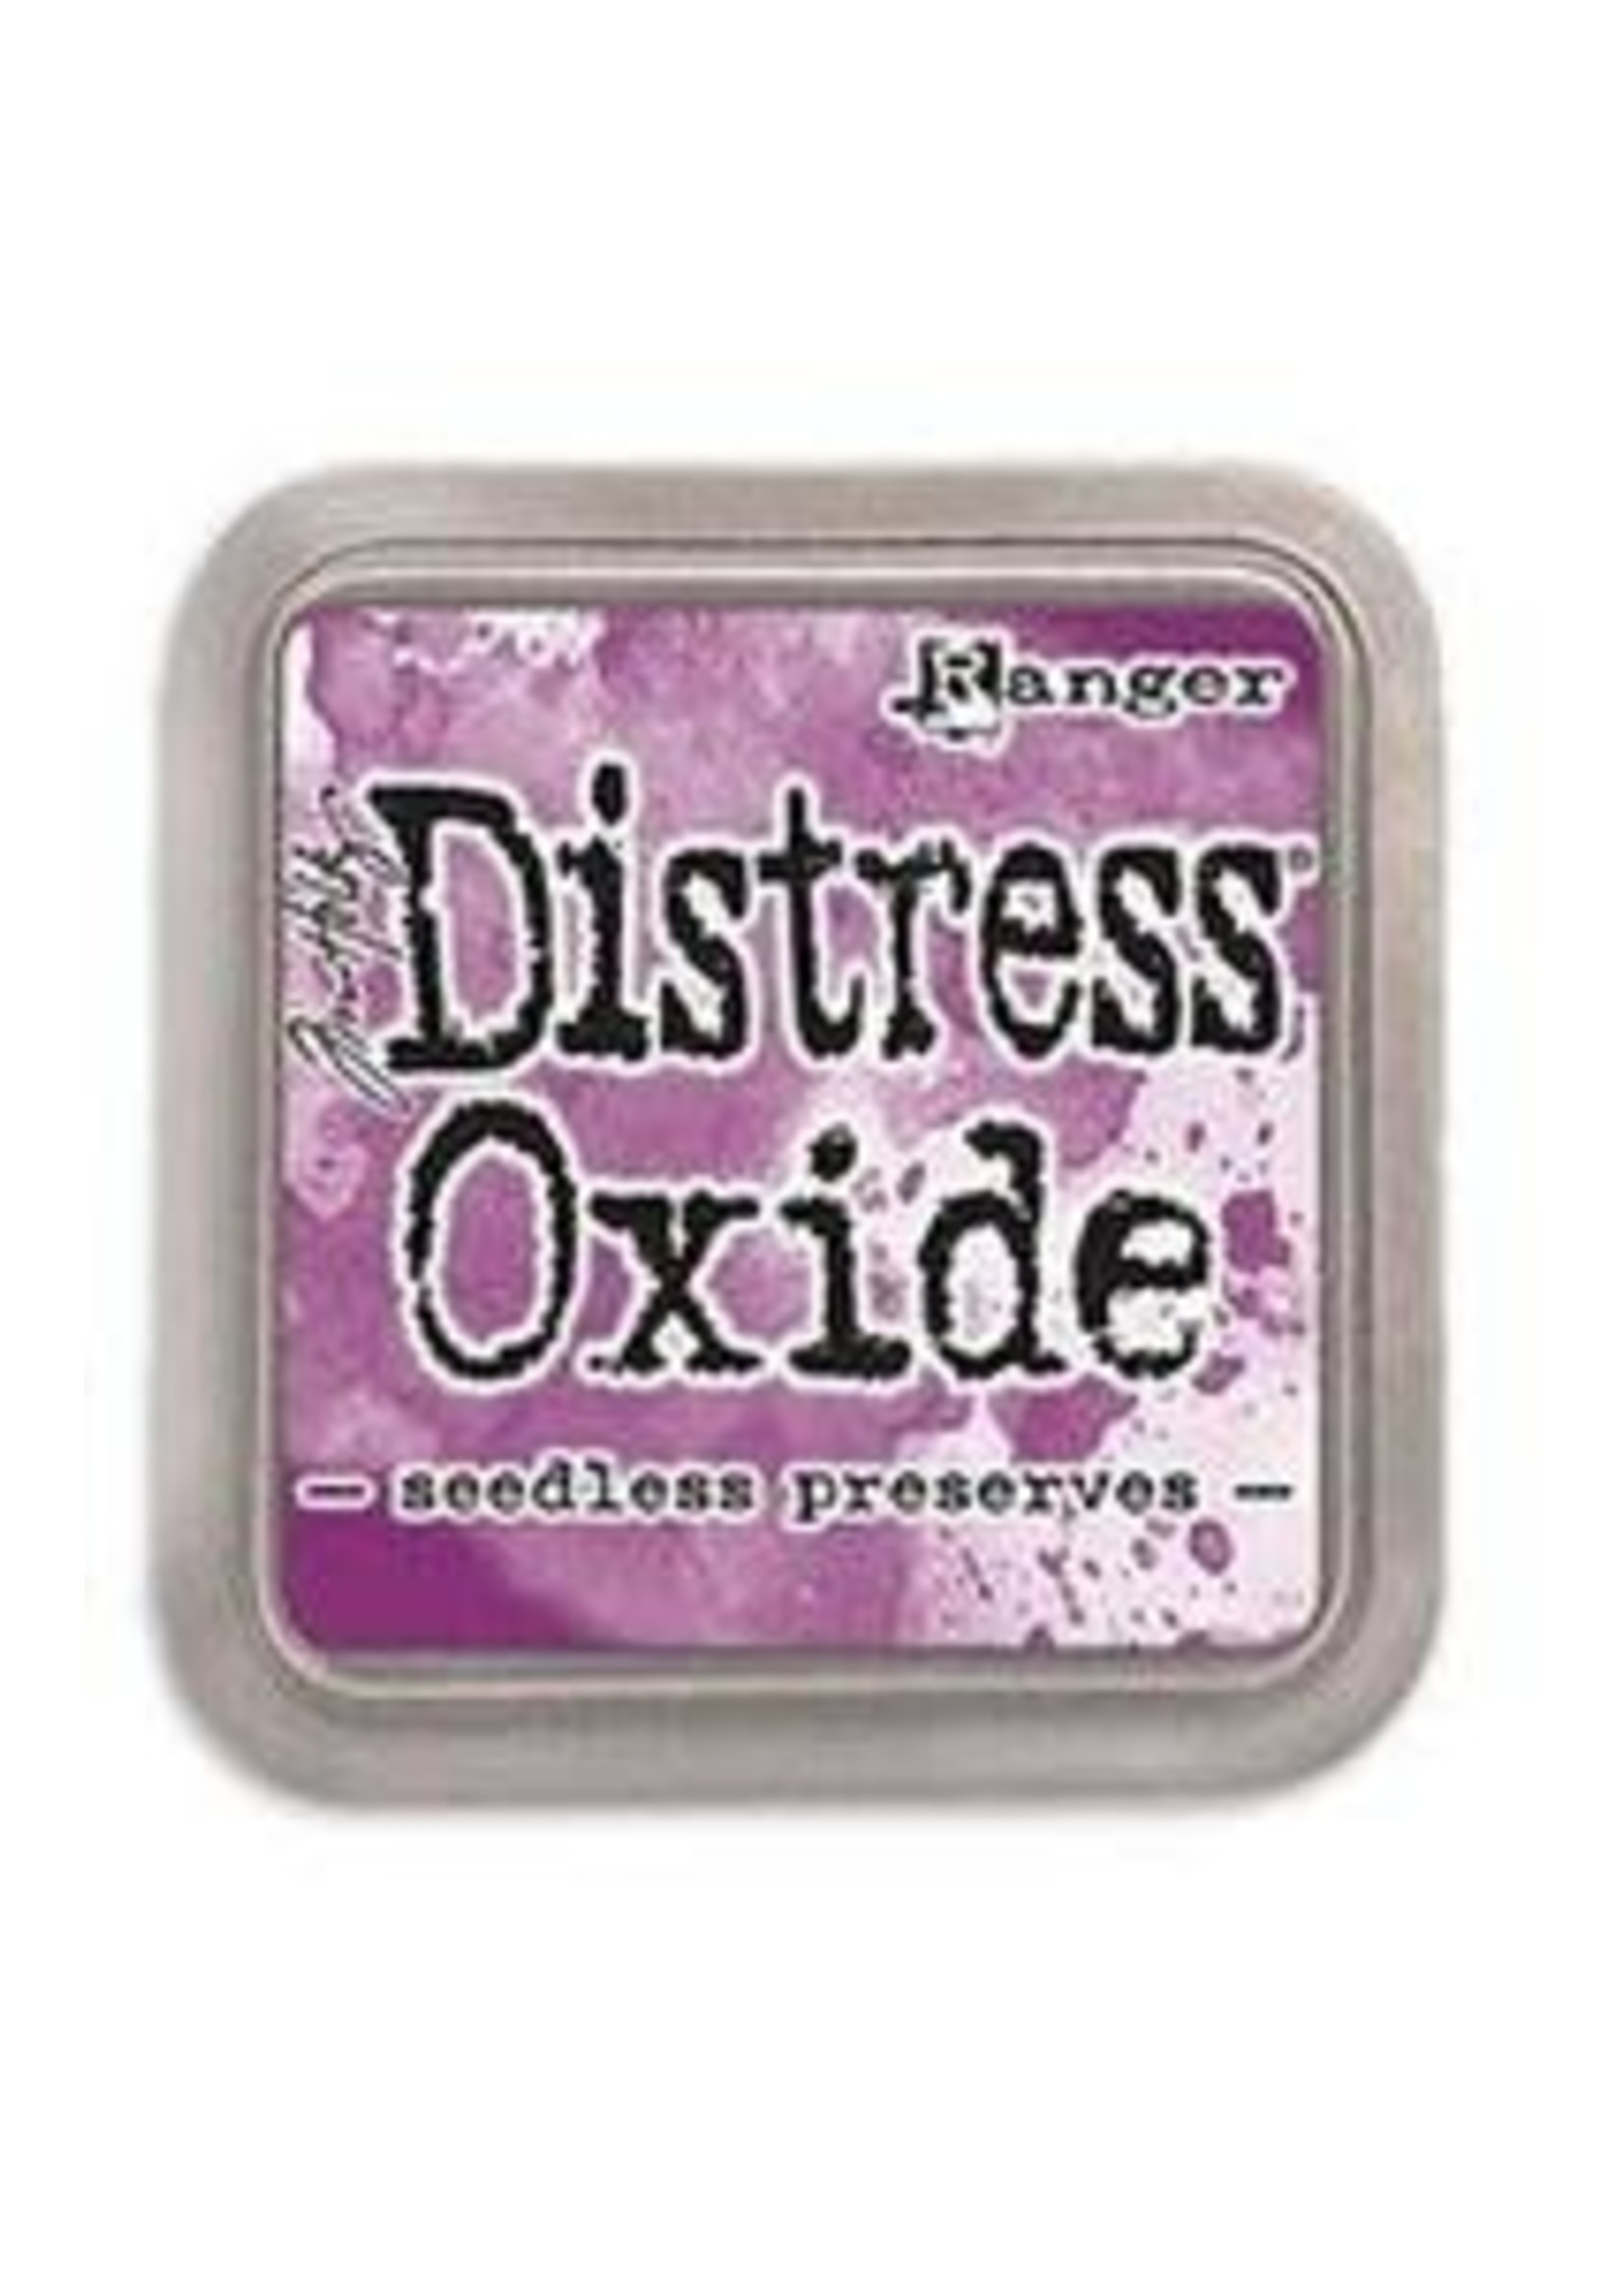 RANGER Distress Oxide Seedless Preserves